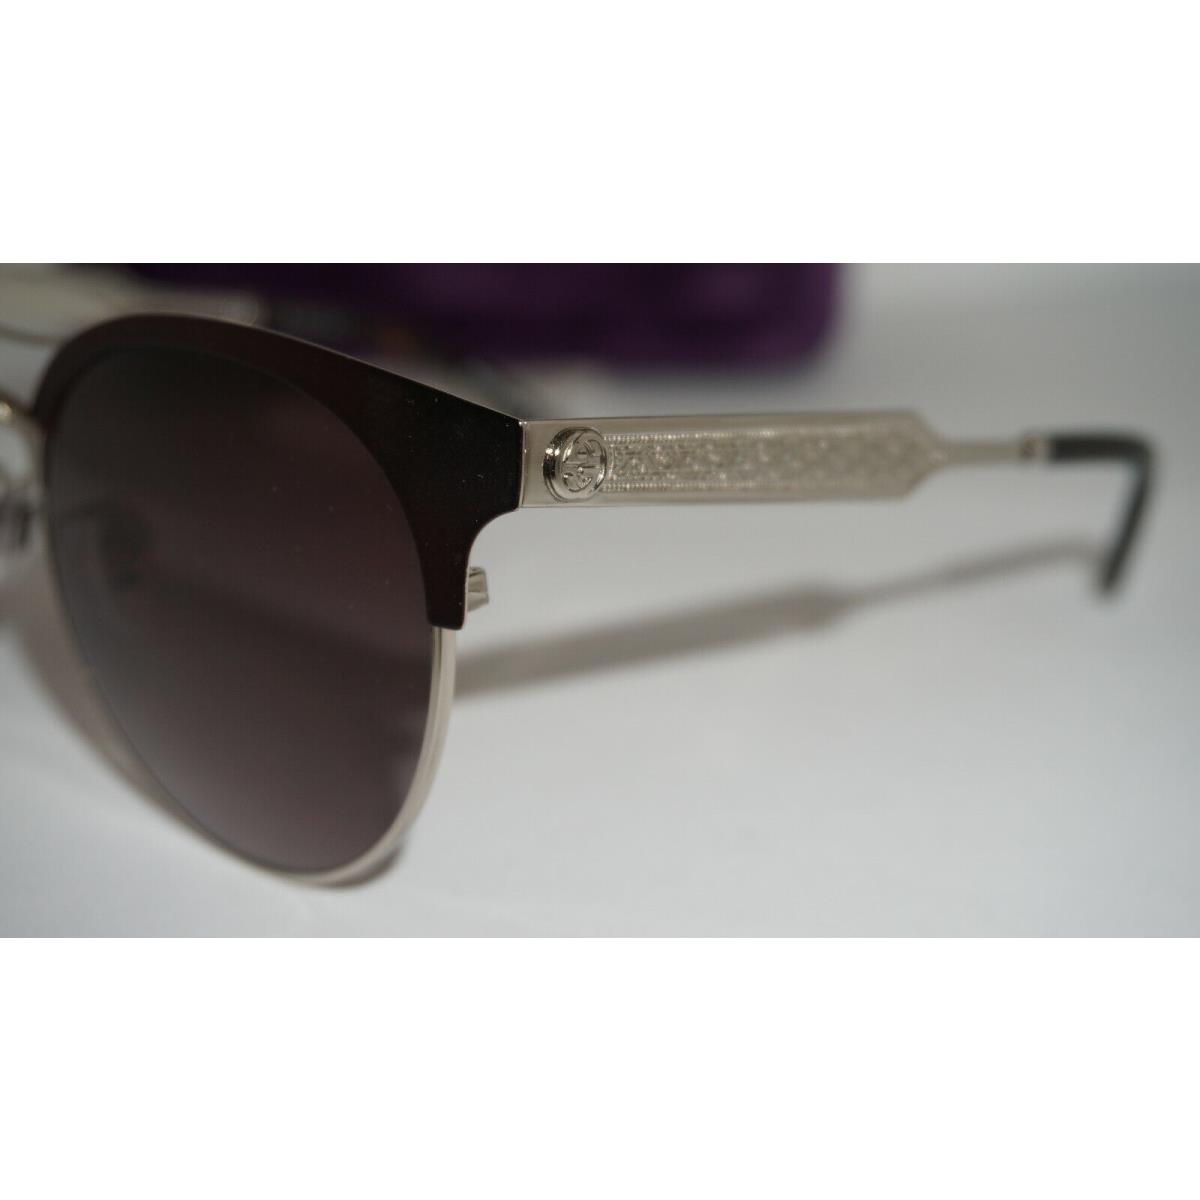 Gucci sunglasses  - Burgundy Palladium , Burgundy Palladium Frame, Grey Gradient Lens 2